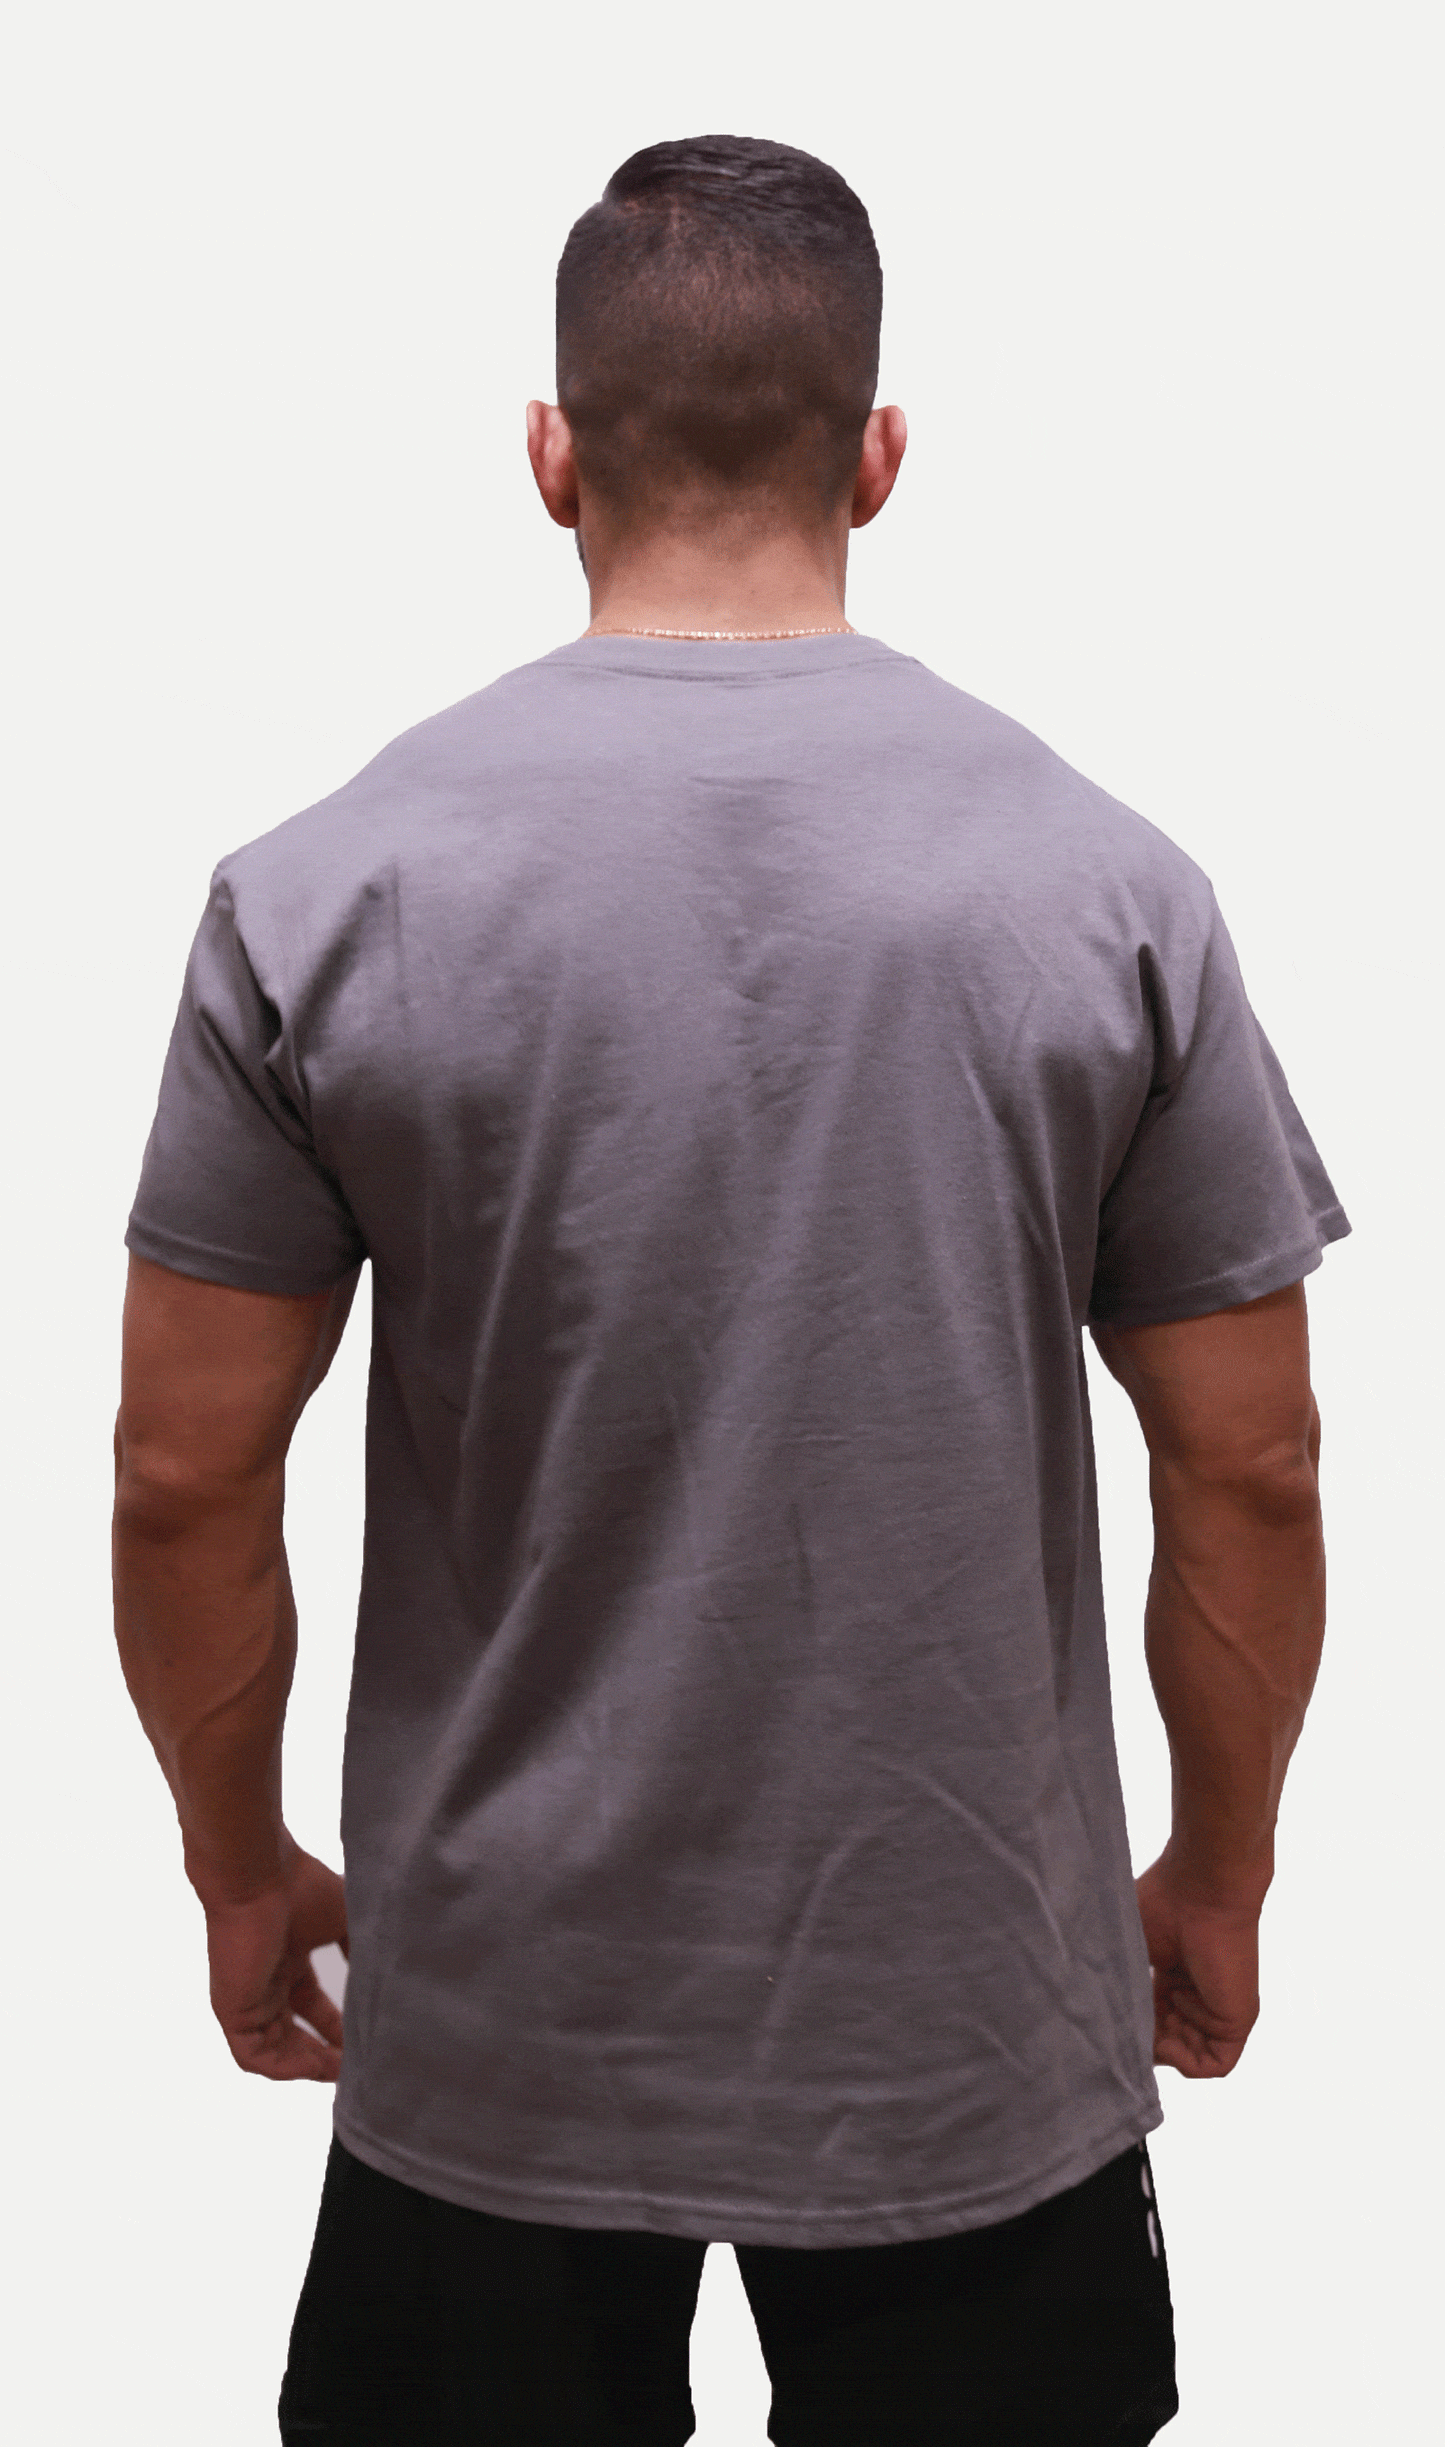 Powerhouse Gym Pro Shop Original T-Shirt Charcoal/Black